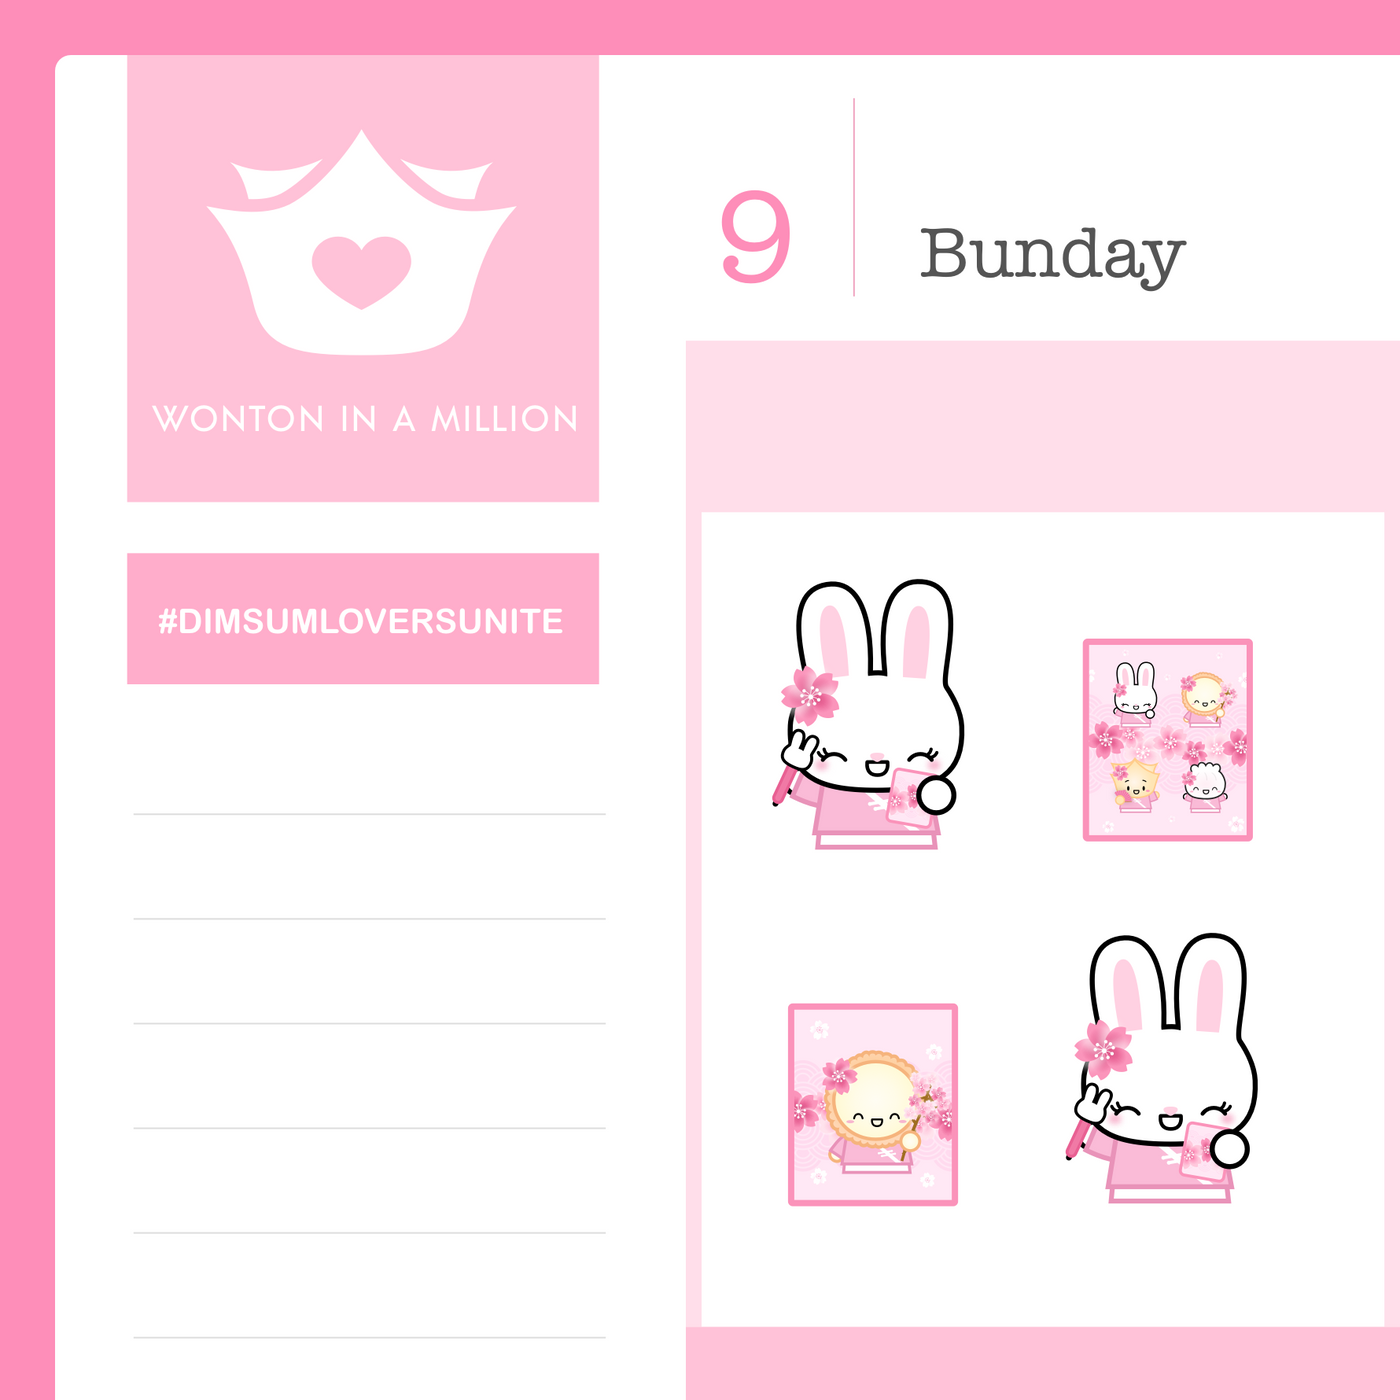 S541 | Sakura Bunny Planners Stickers